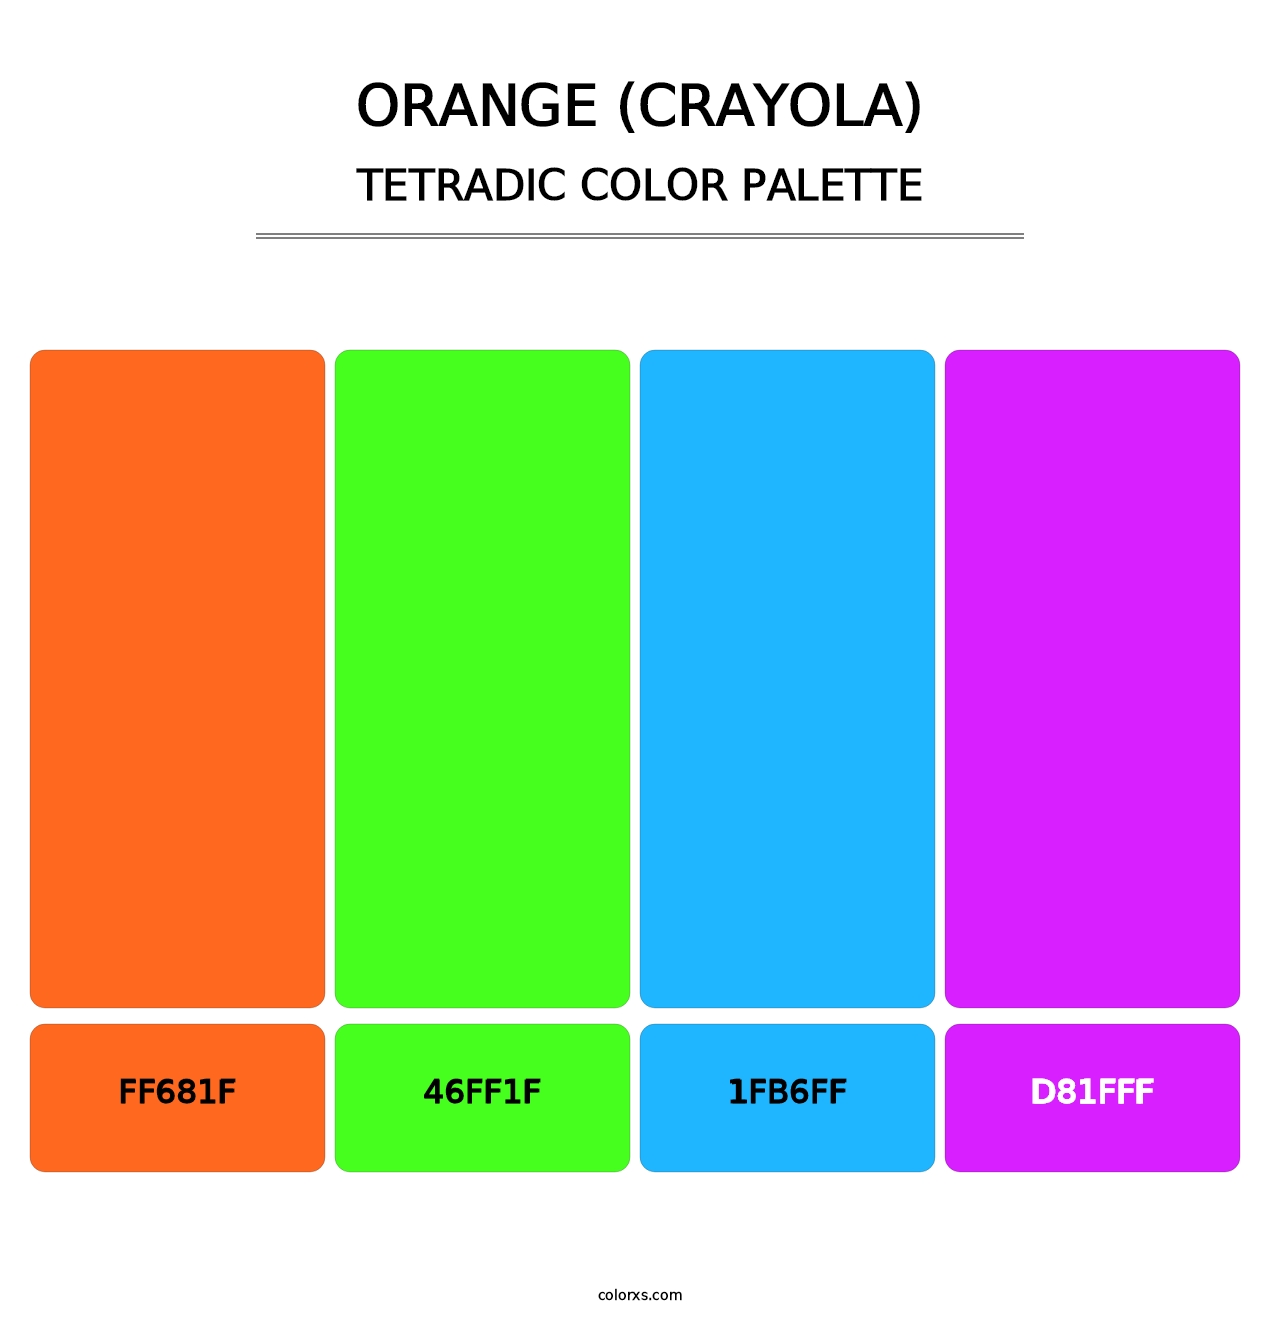 Orange (Crayola) - Tetradic Color Palette